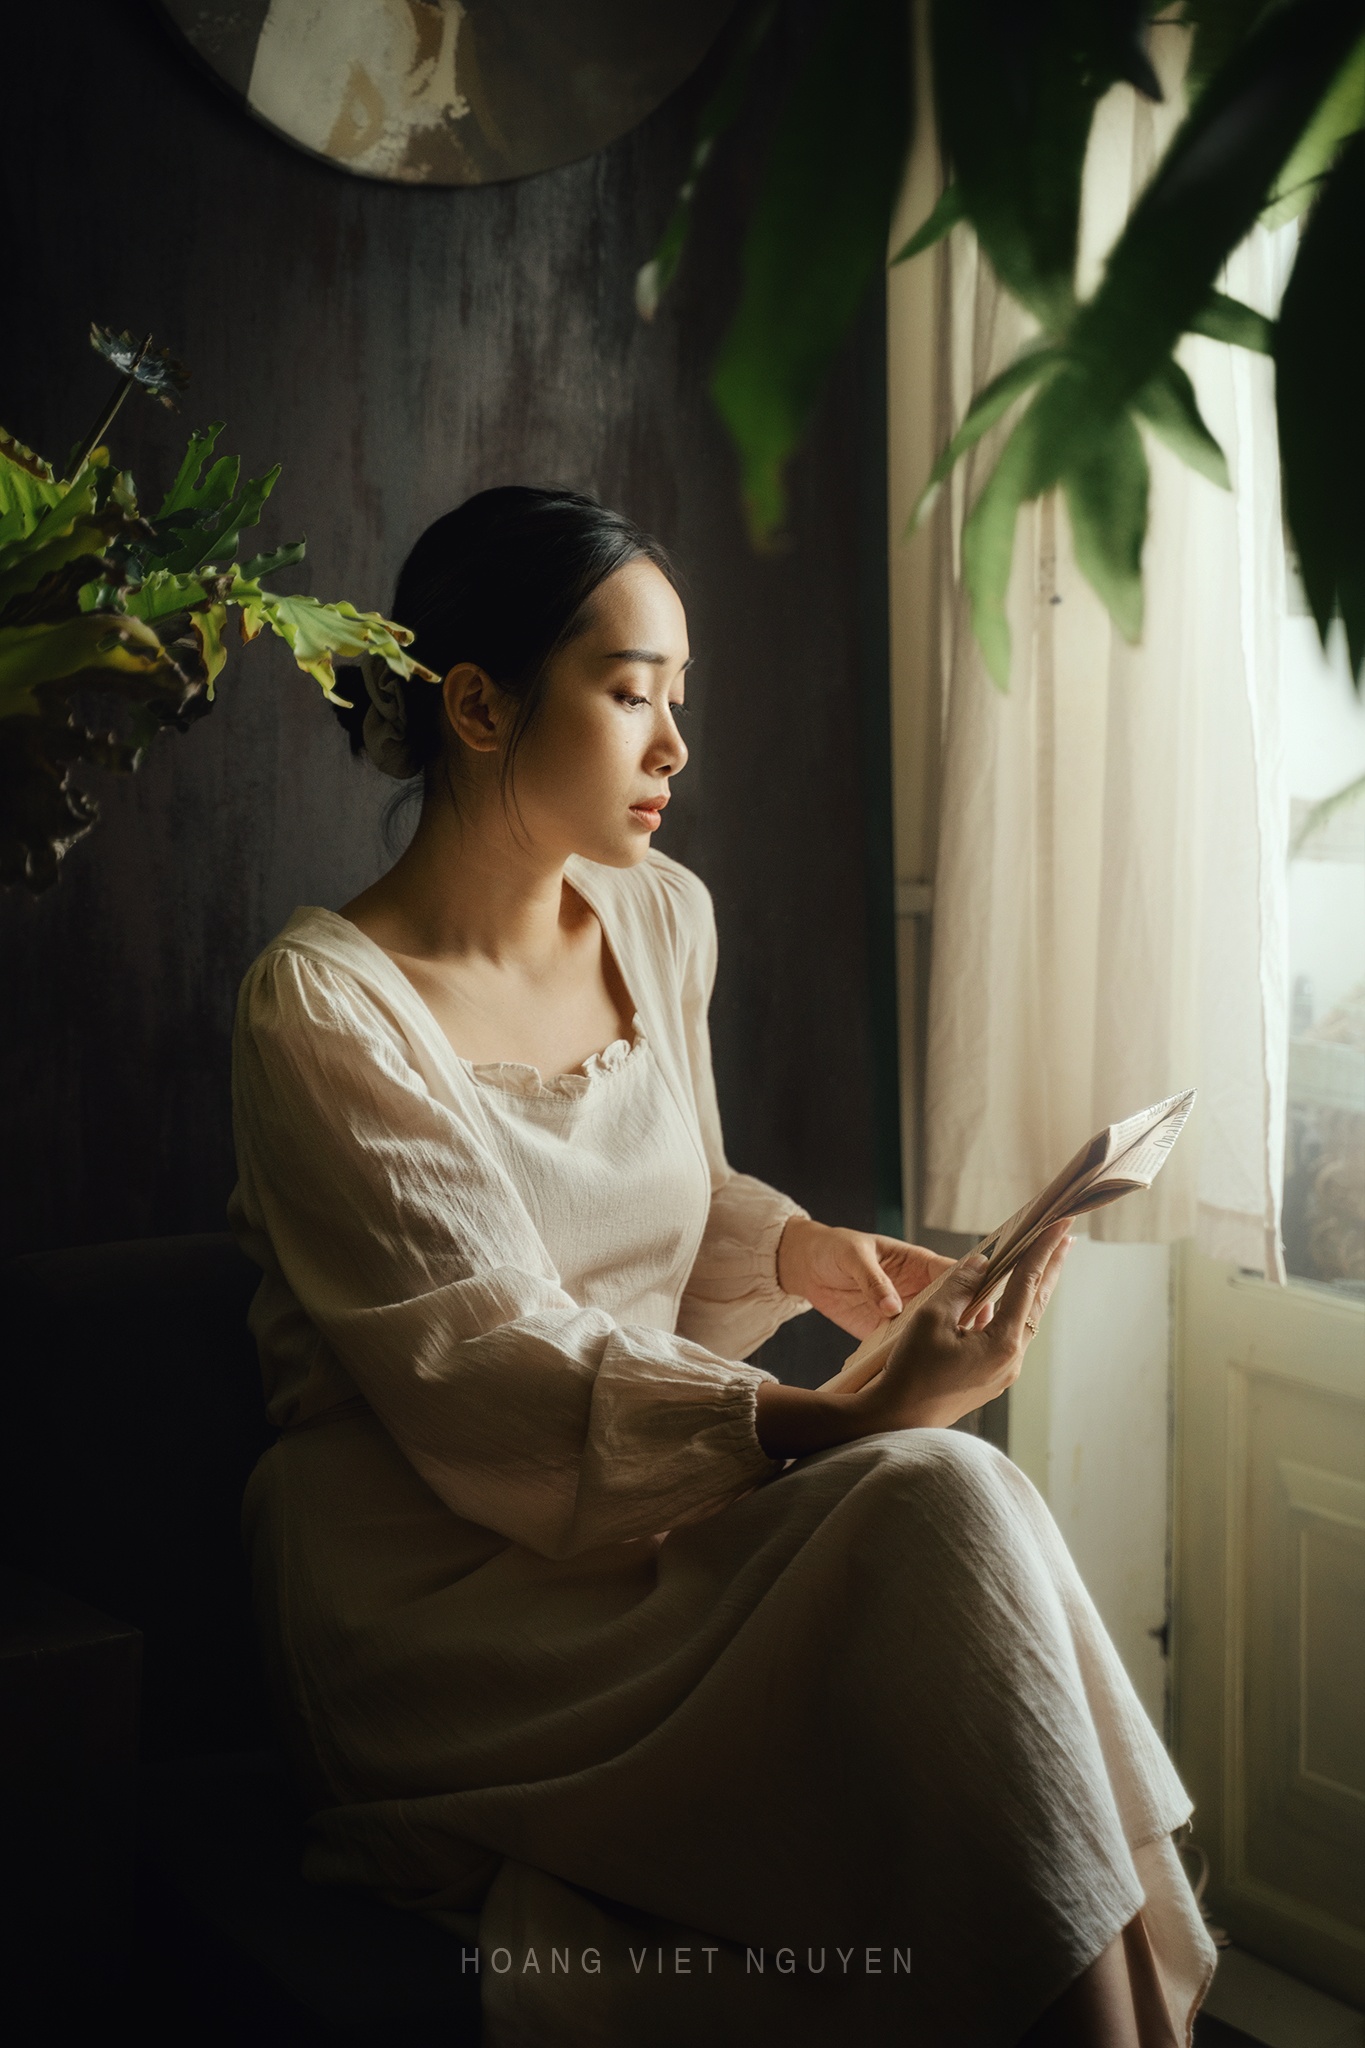 portrait, mood portrait, face, mood, asian, vietnamese, vietnam, face, reading, indoor, natural light, ambient light, calm, Hoang Viet Nguyen